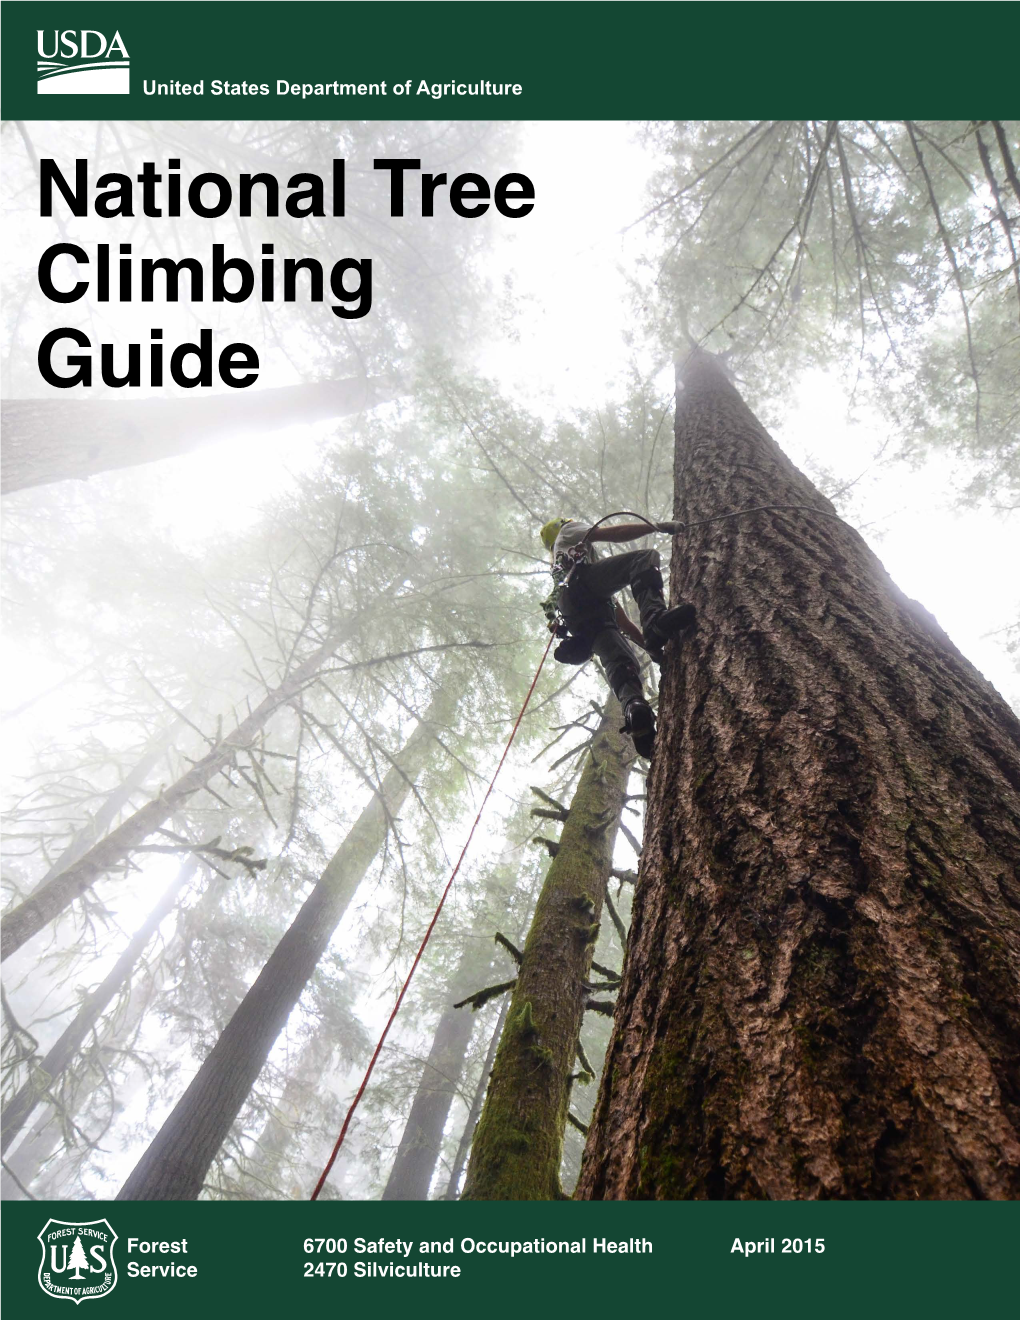 National Tree Climbing Guide